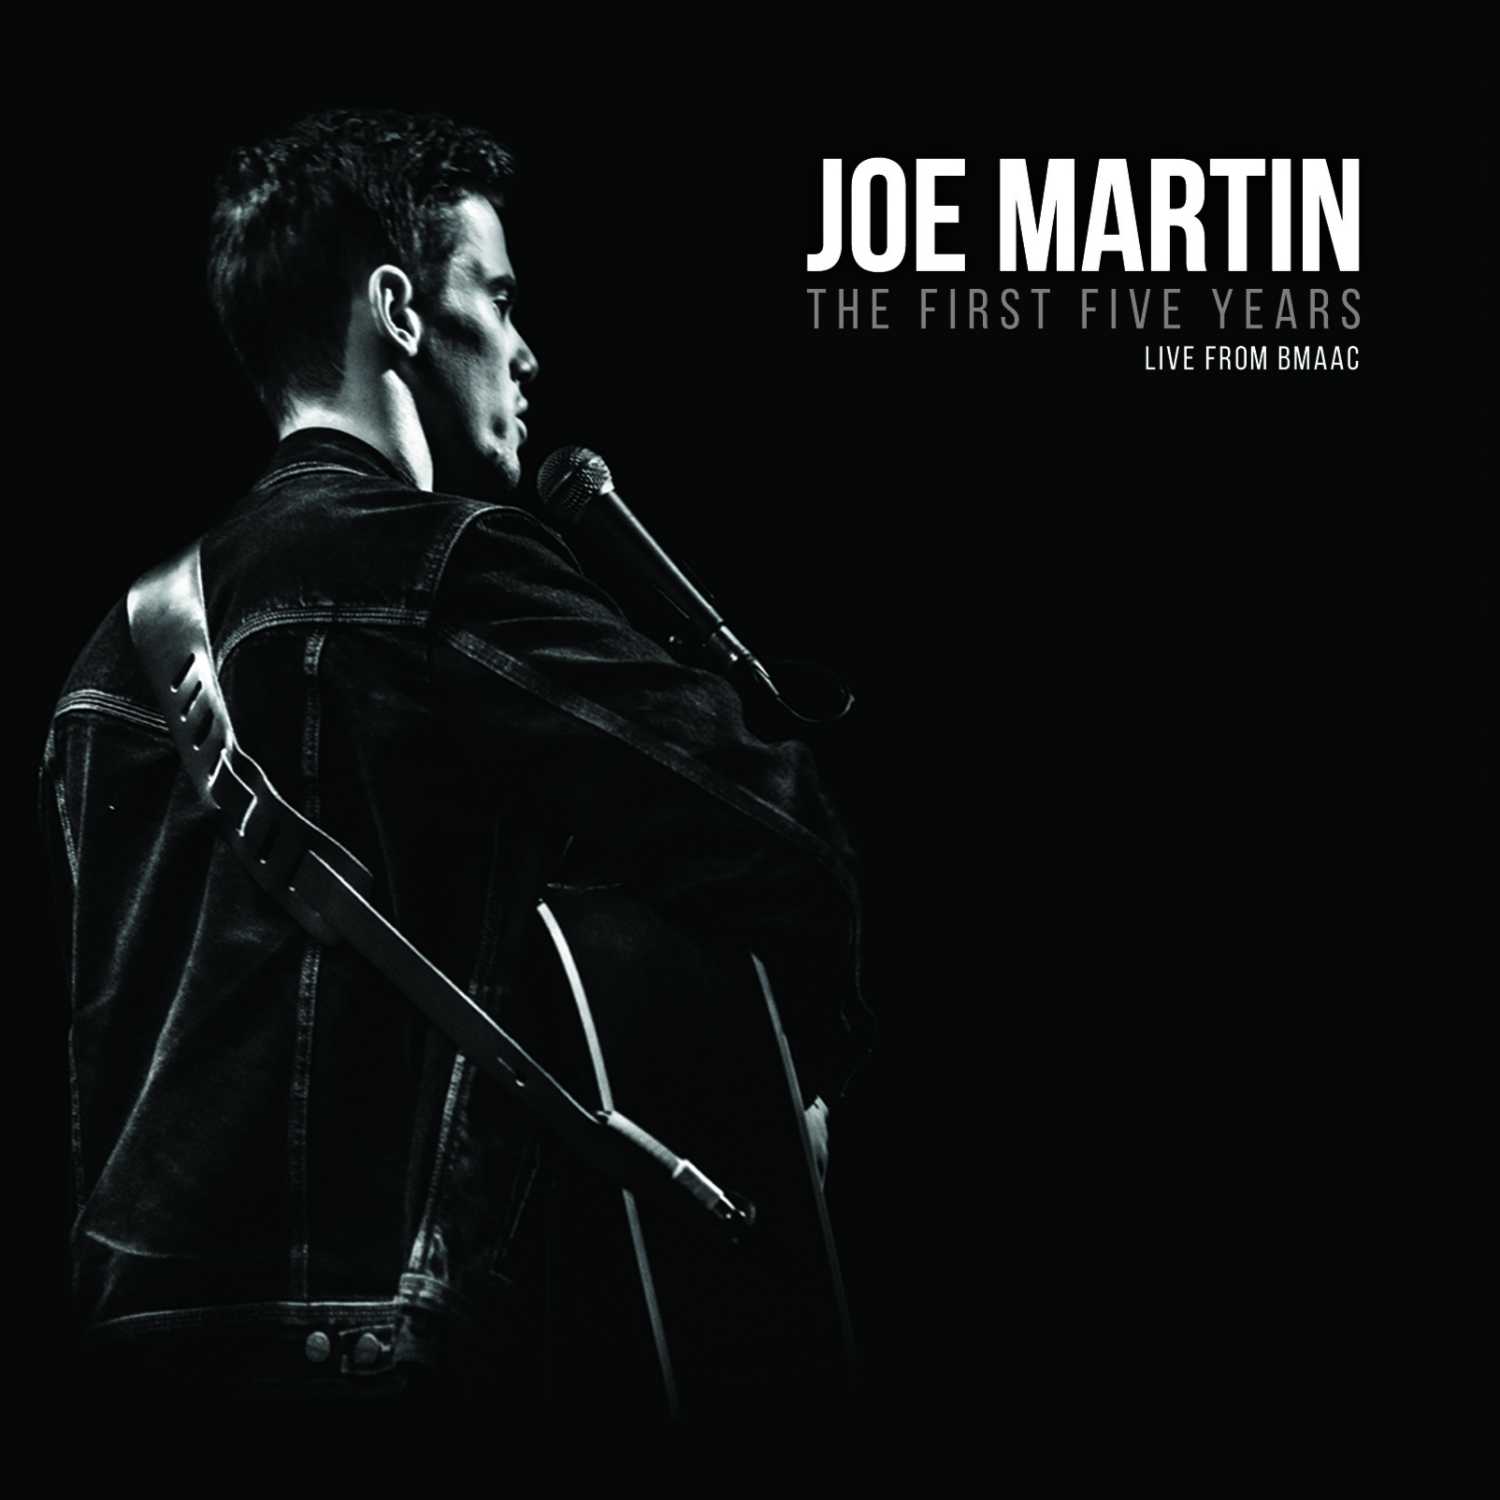 2. Denver - Joe Martin - The First Five Years (Album 1)